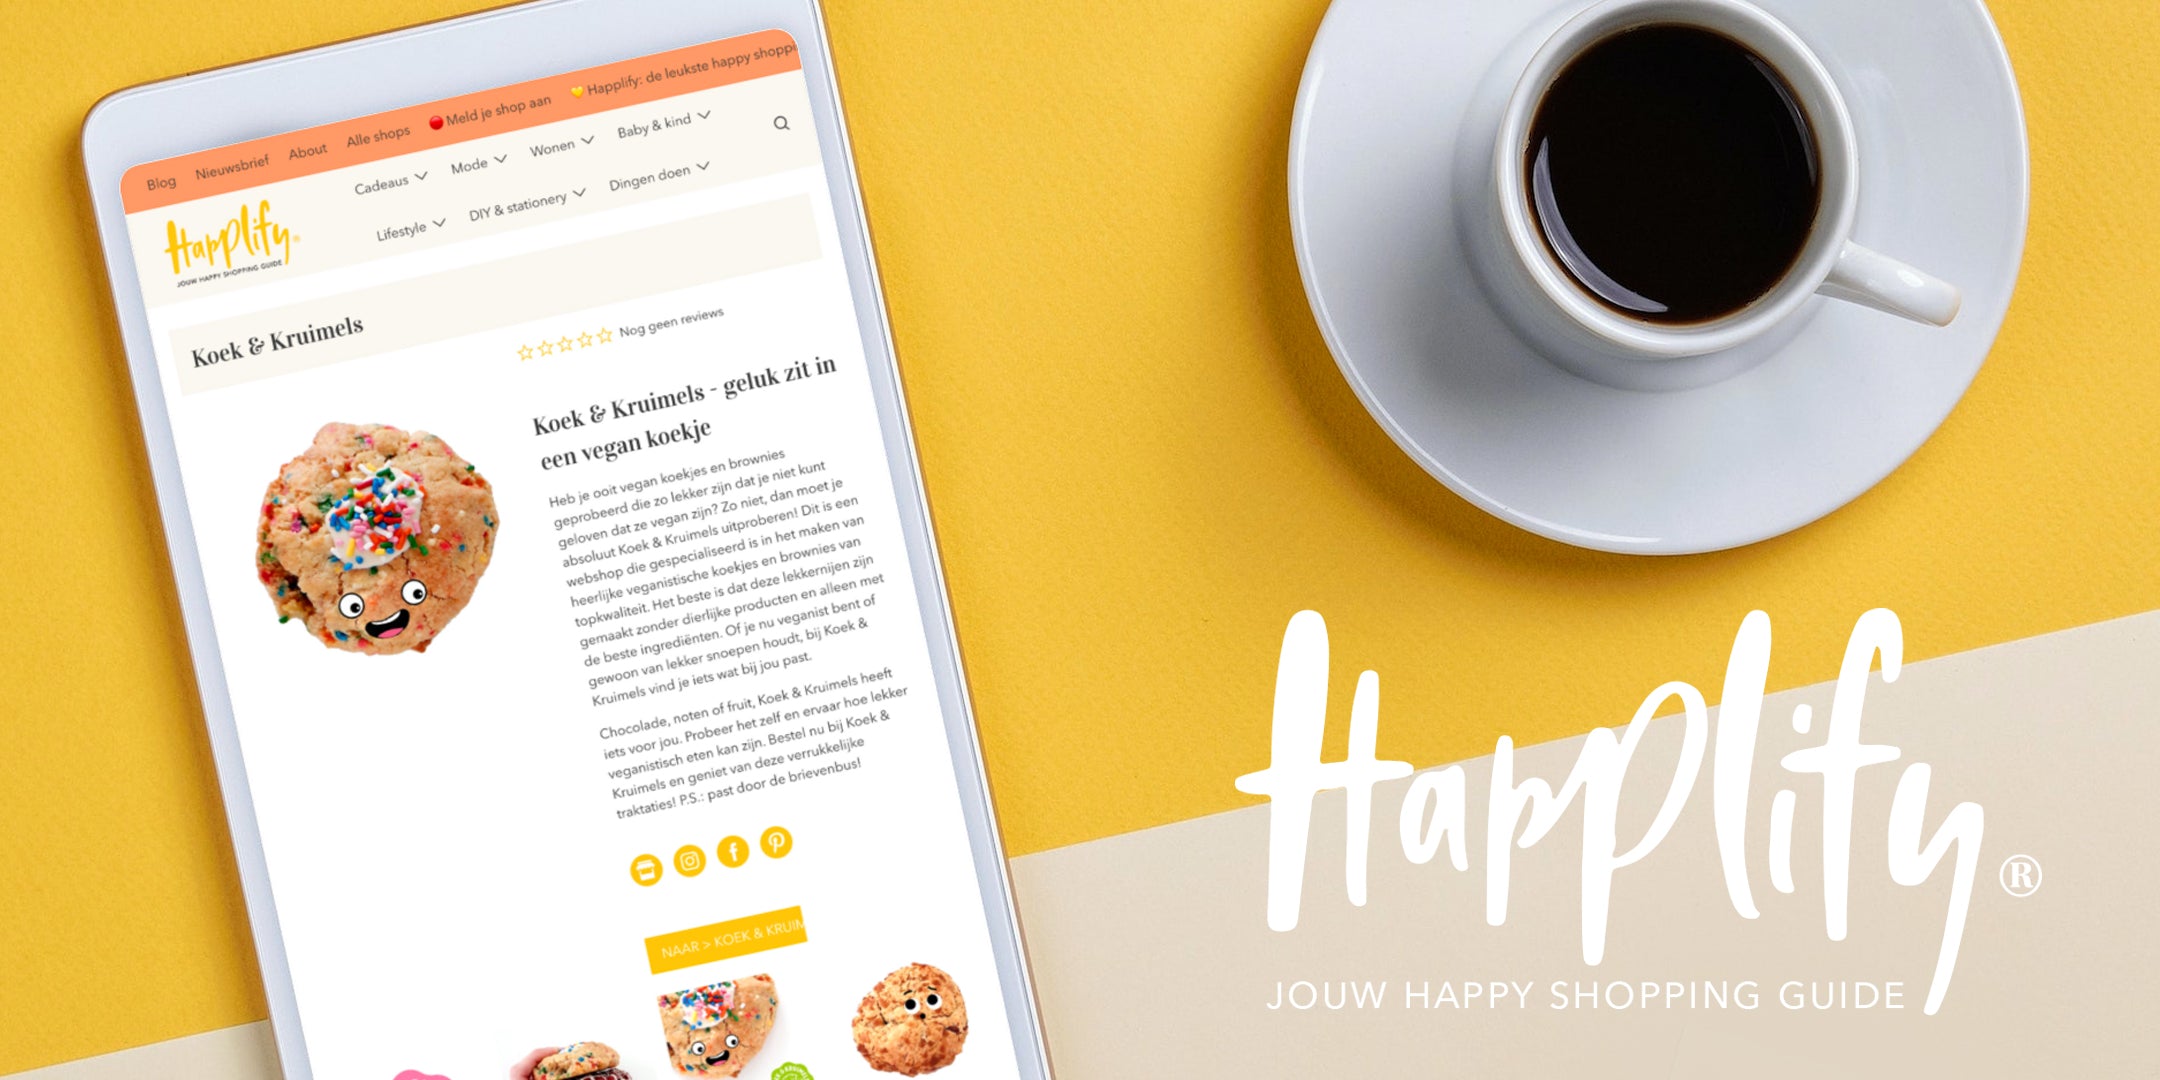 Happlify, happy shopping guide voor webshops in Nederland en België